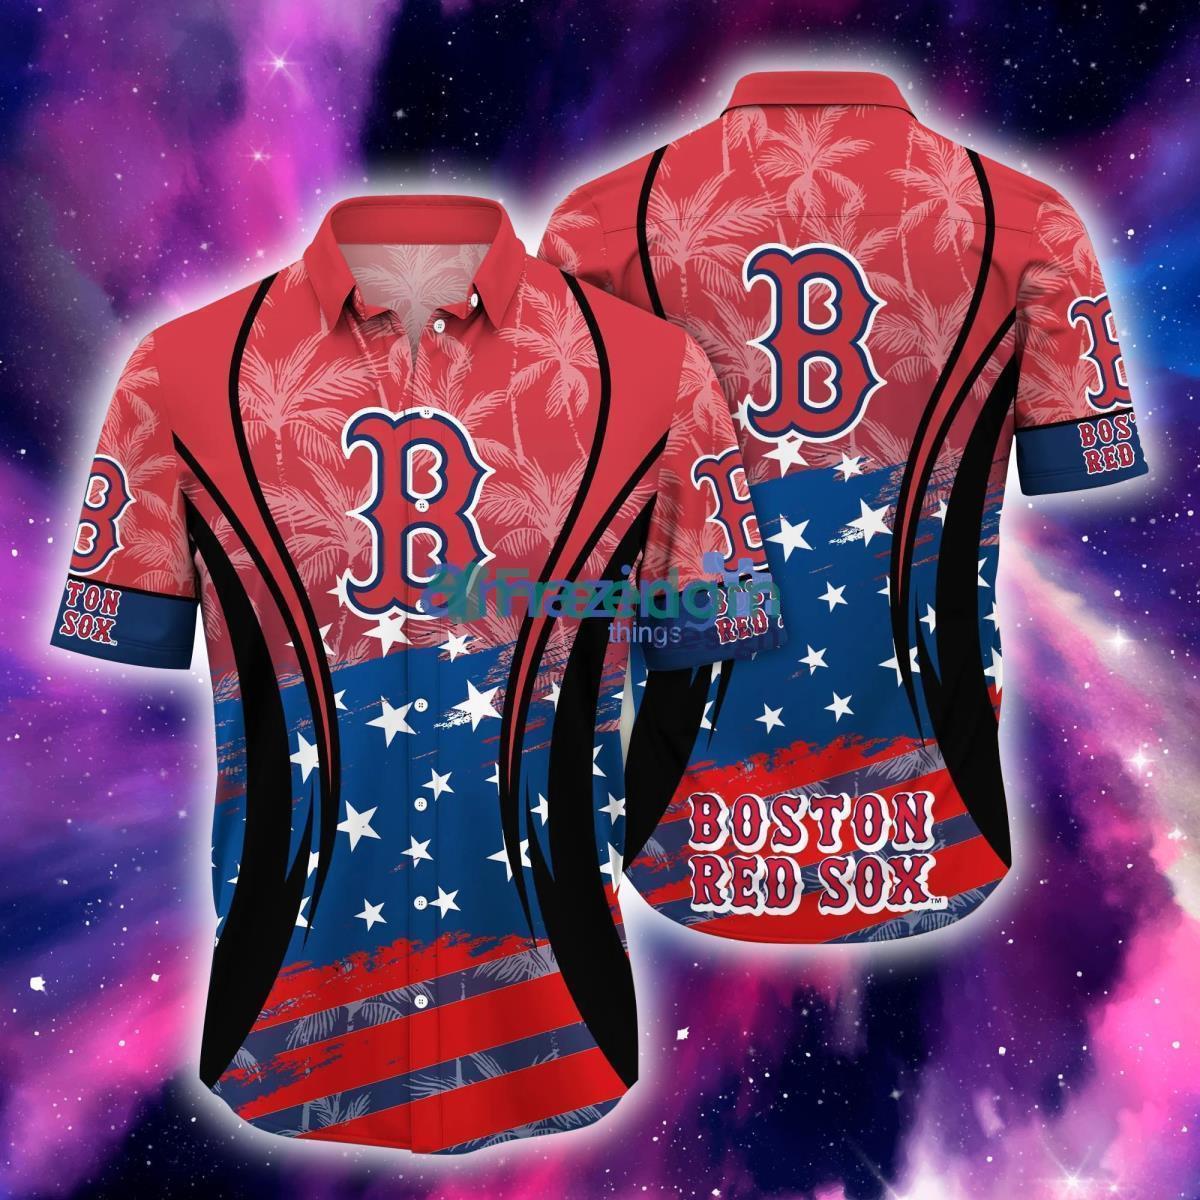 Arizona Diamondbacks MLB Custom Name Hawaiian Shirt Hot Design For Fans